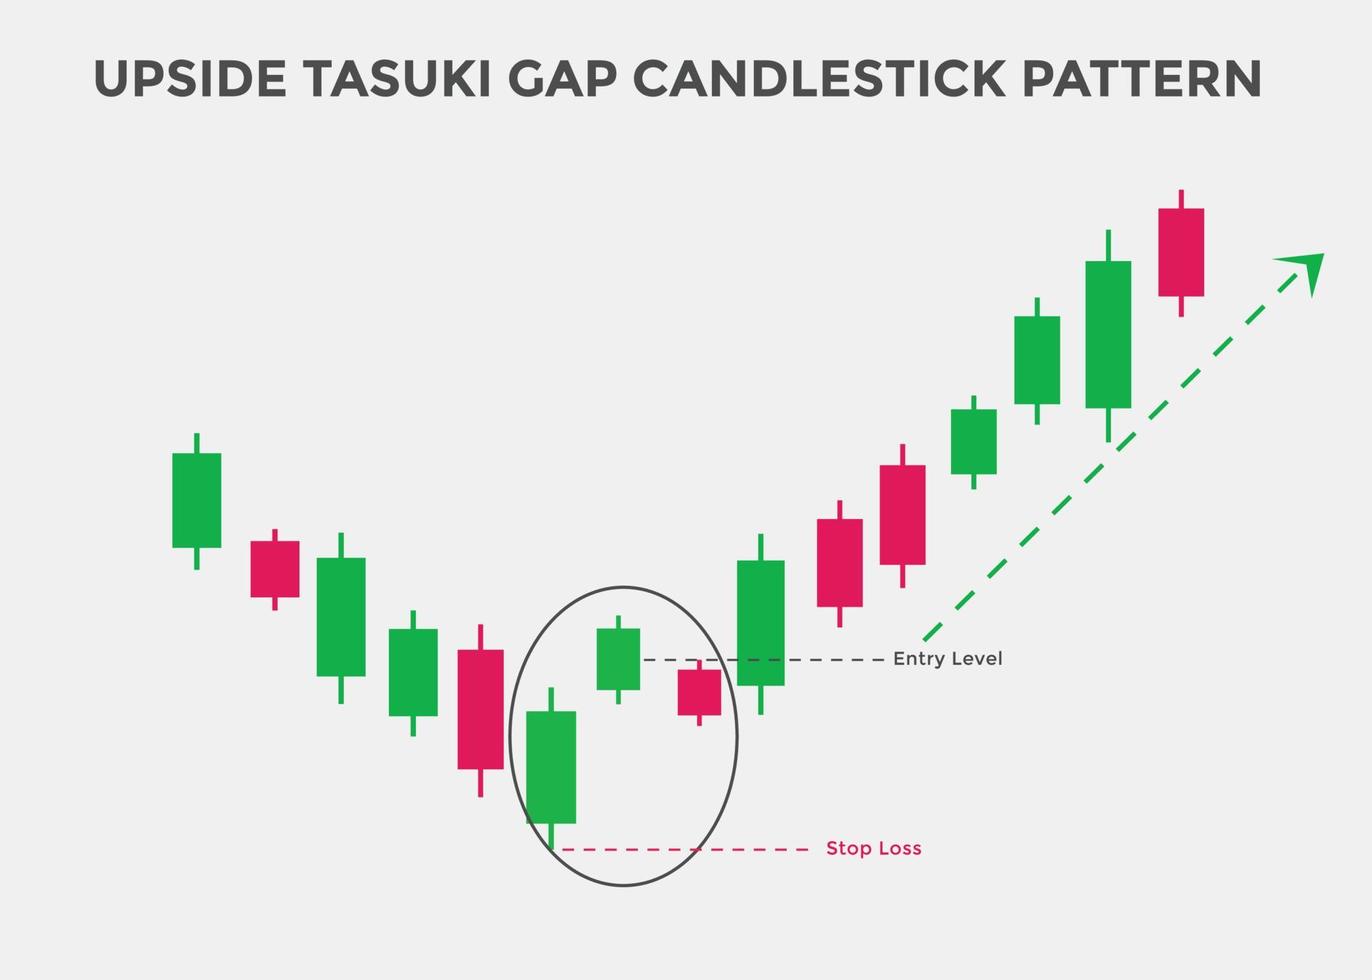 upside tasuki gap candlestick patterns. Candlestick chart Pattern For Traders. Powerful bullish Candlestick chart for forex, stock, cryptocurrency. japanese candlesticks chart vector